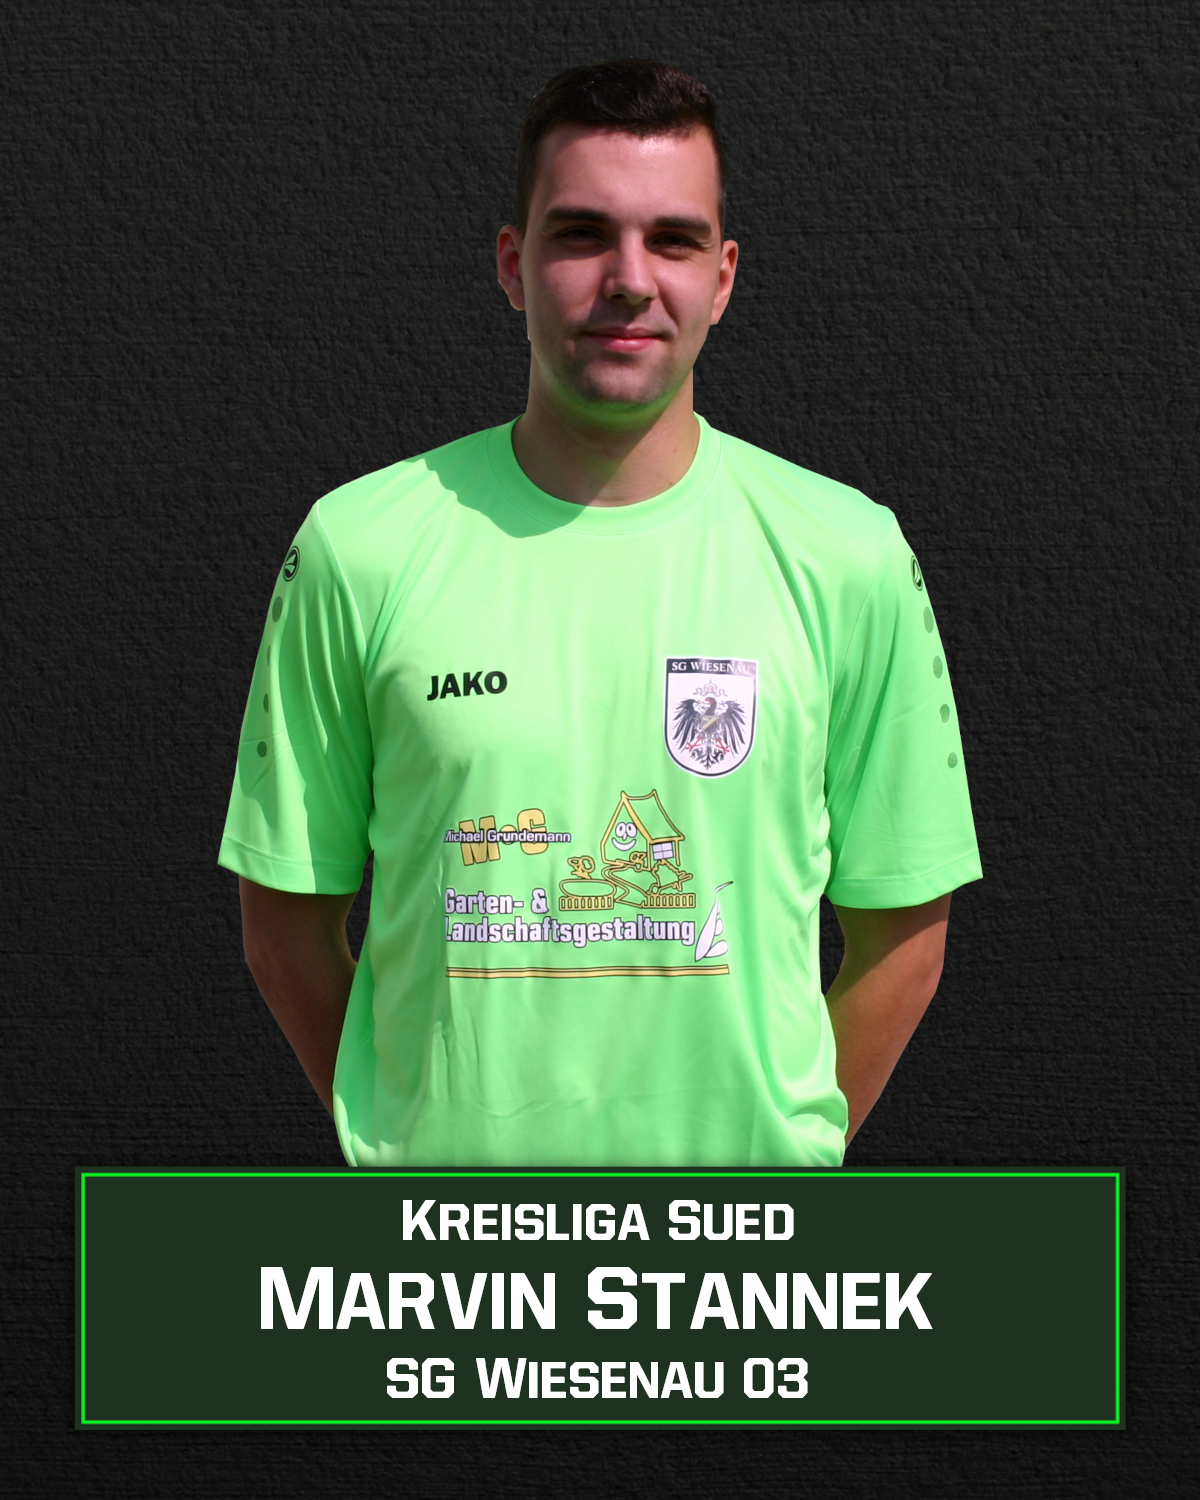 Marvin Stannek